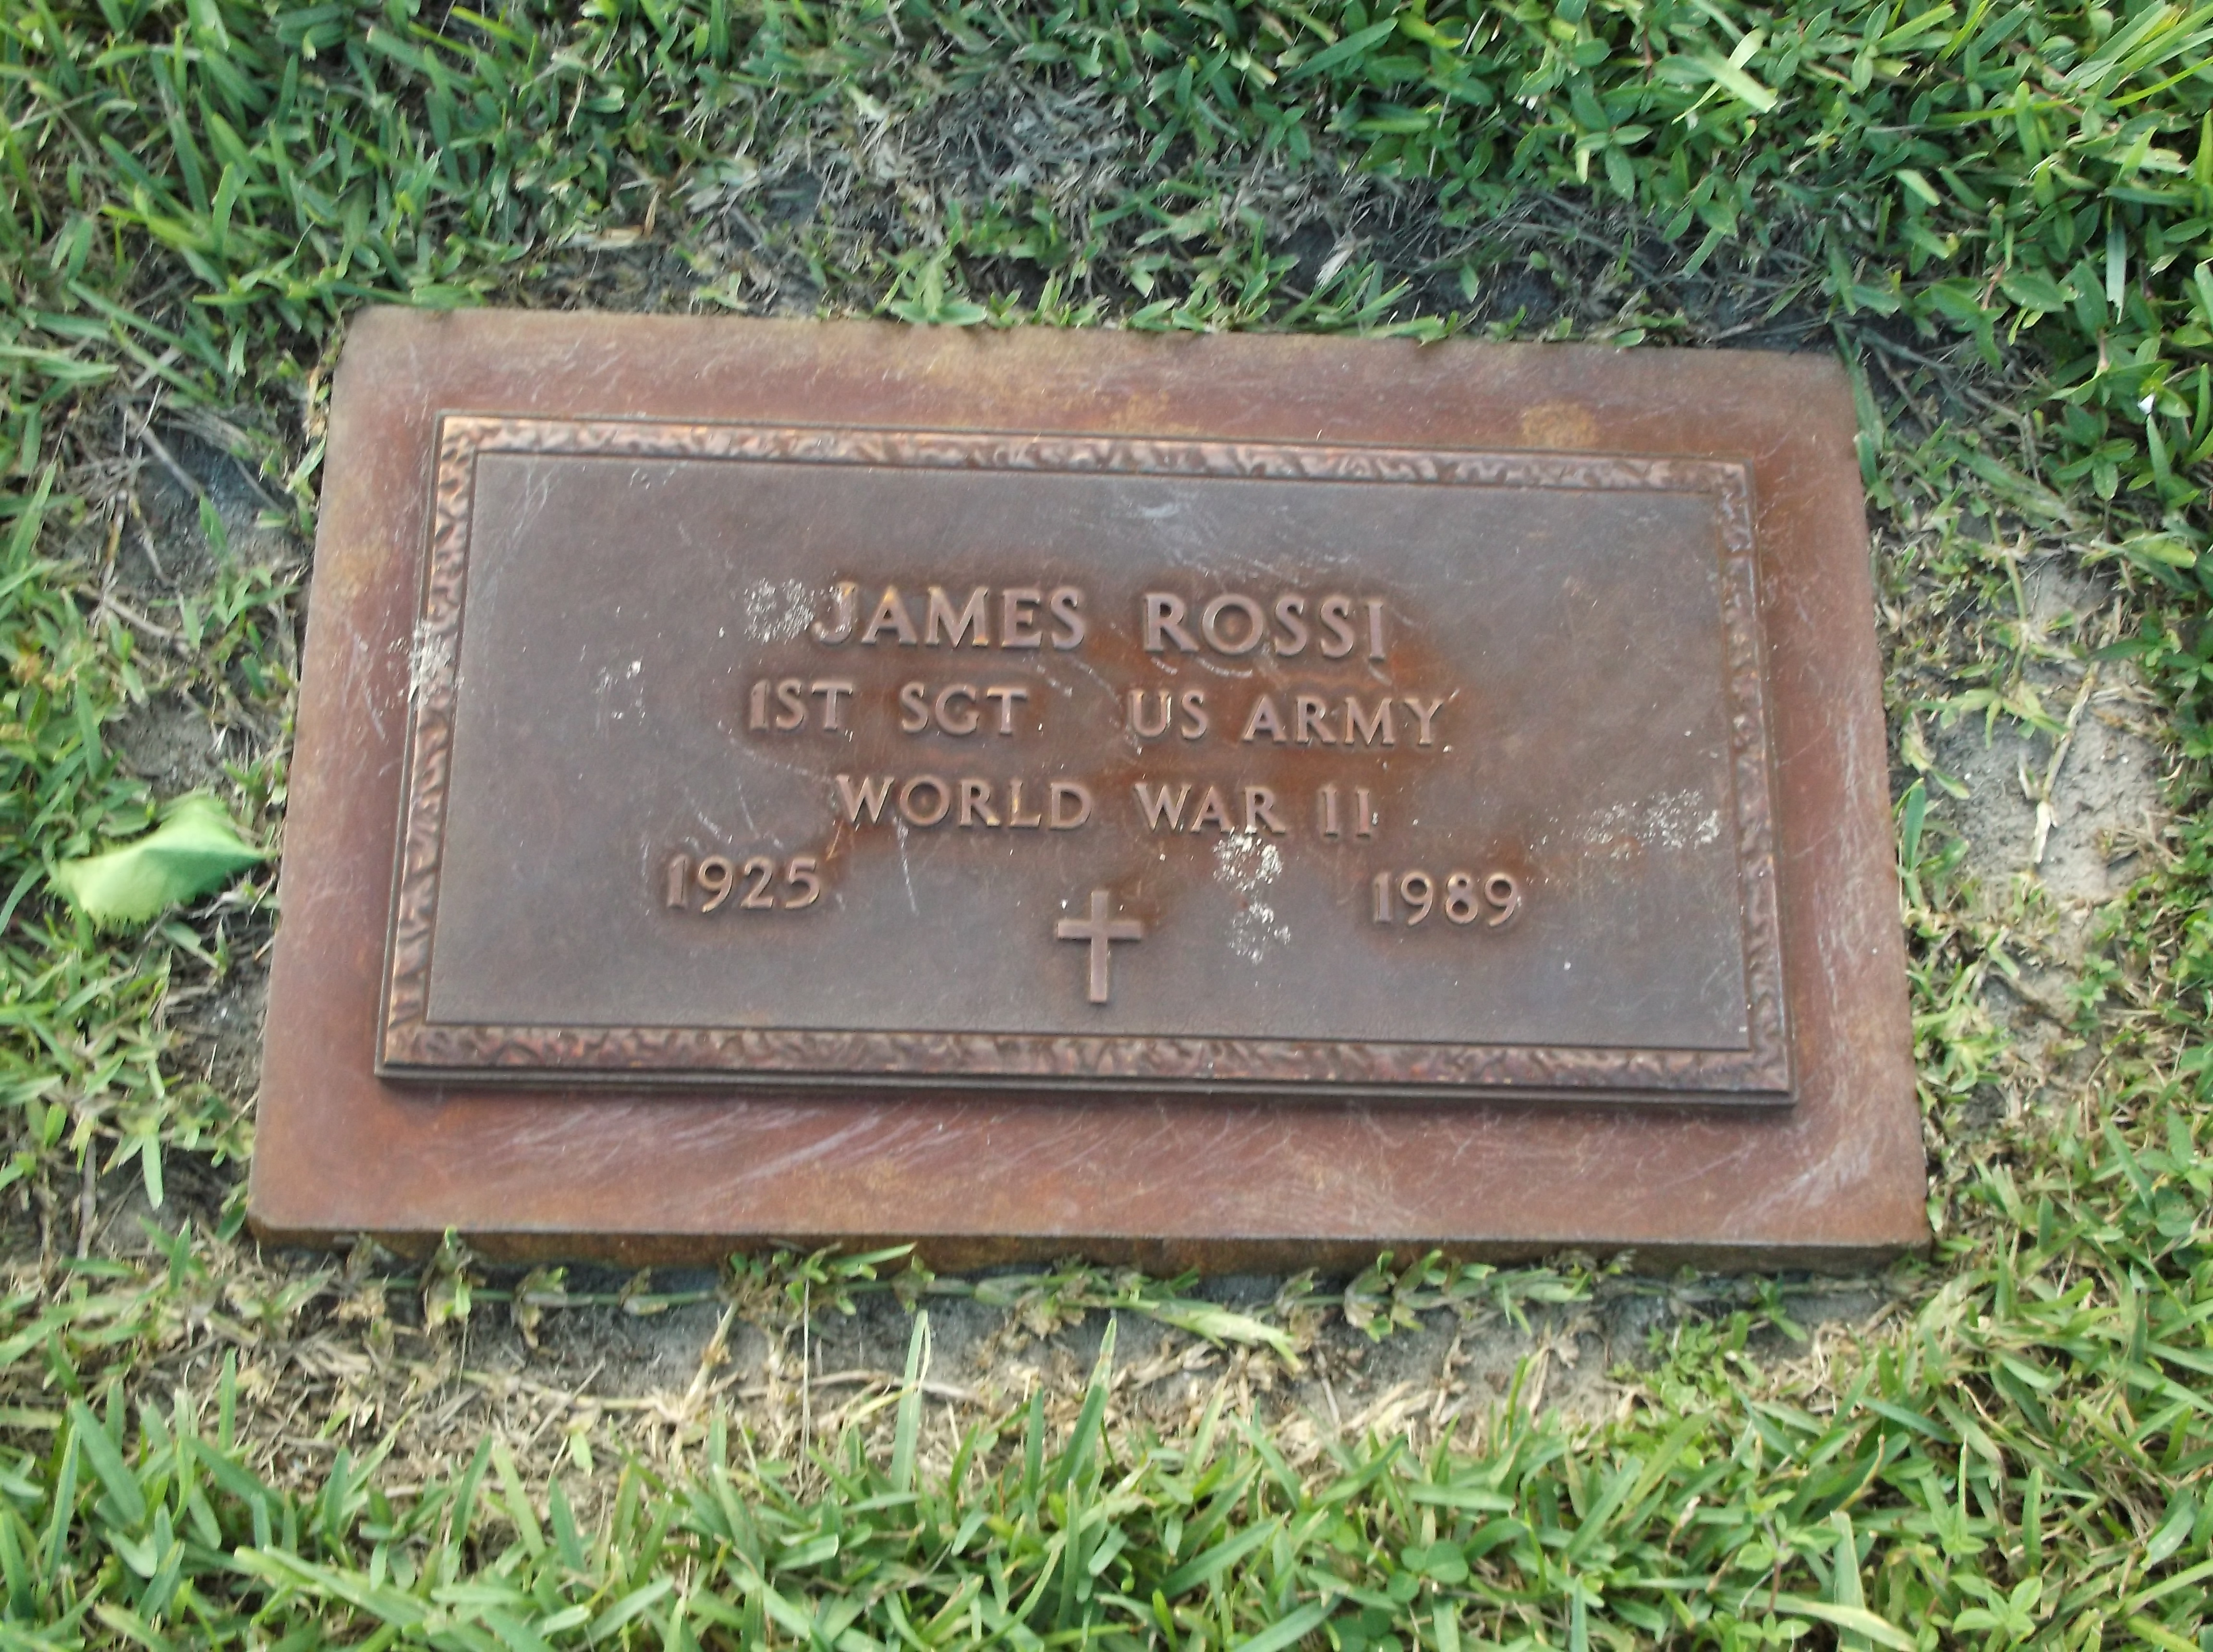 James Rossi